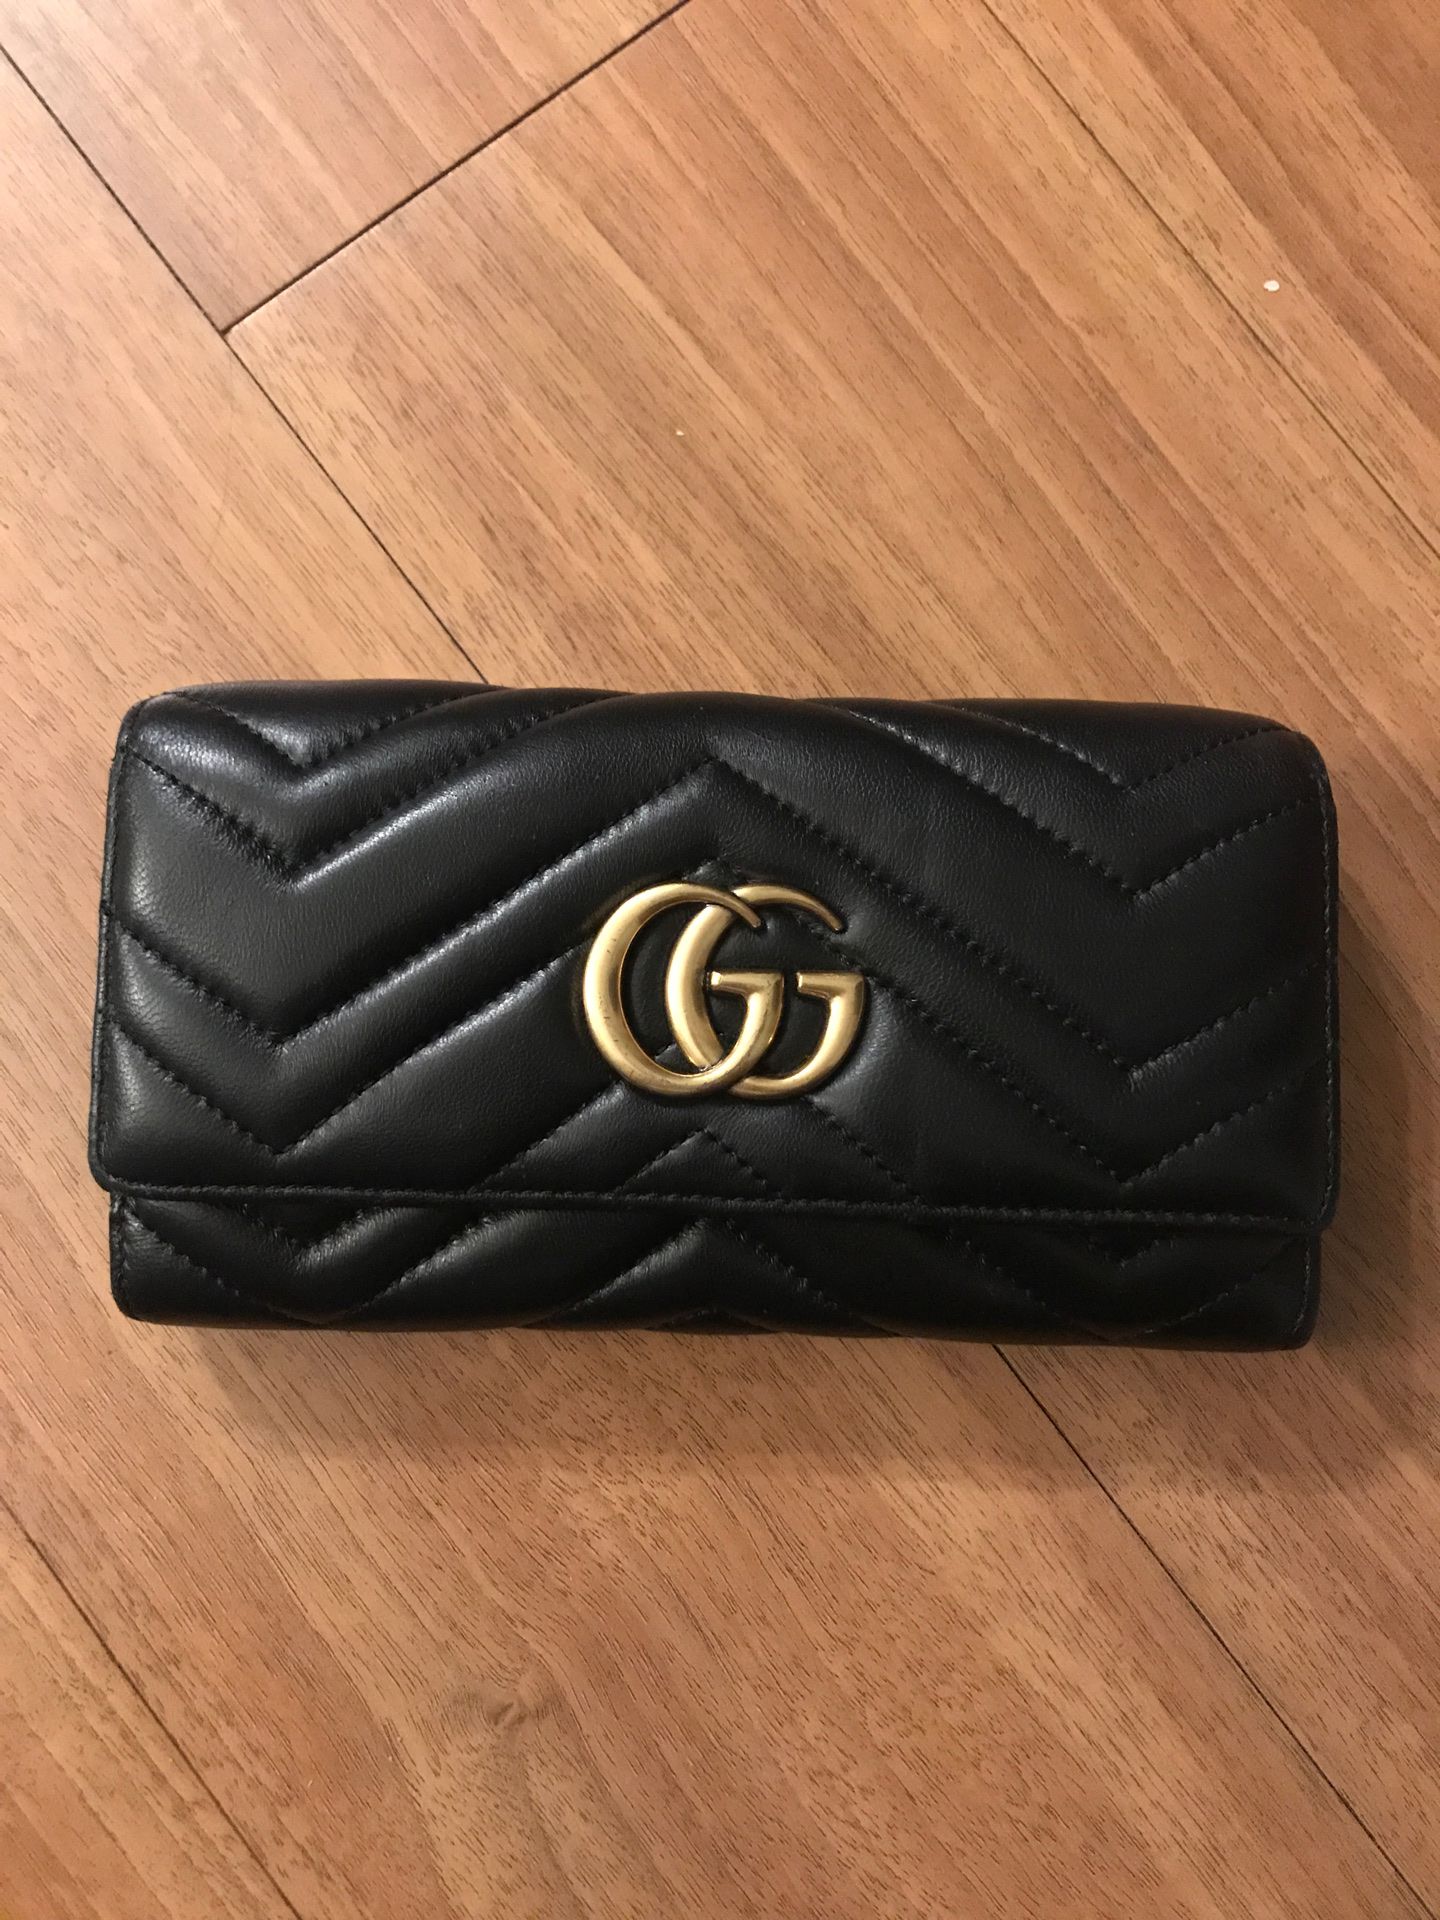 Women’s Wallet brand new